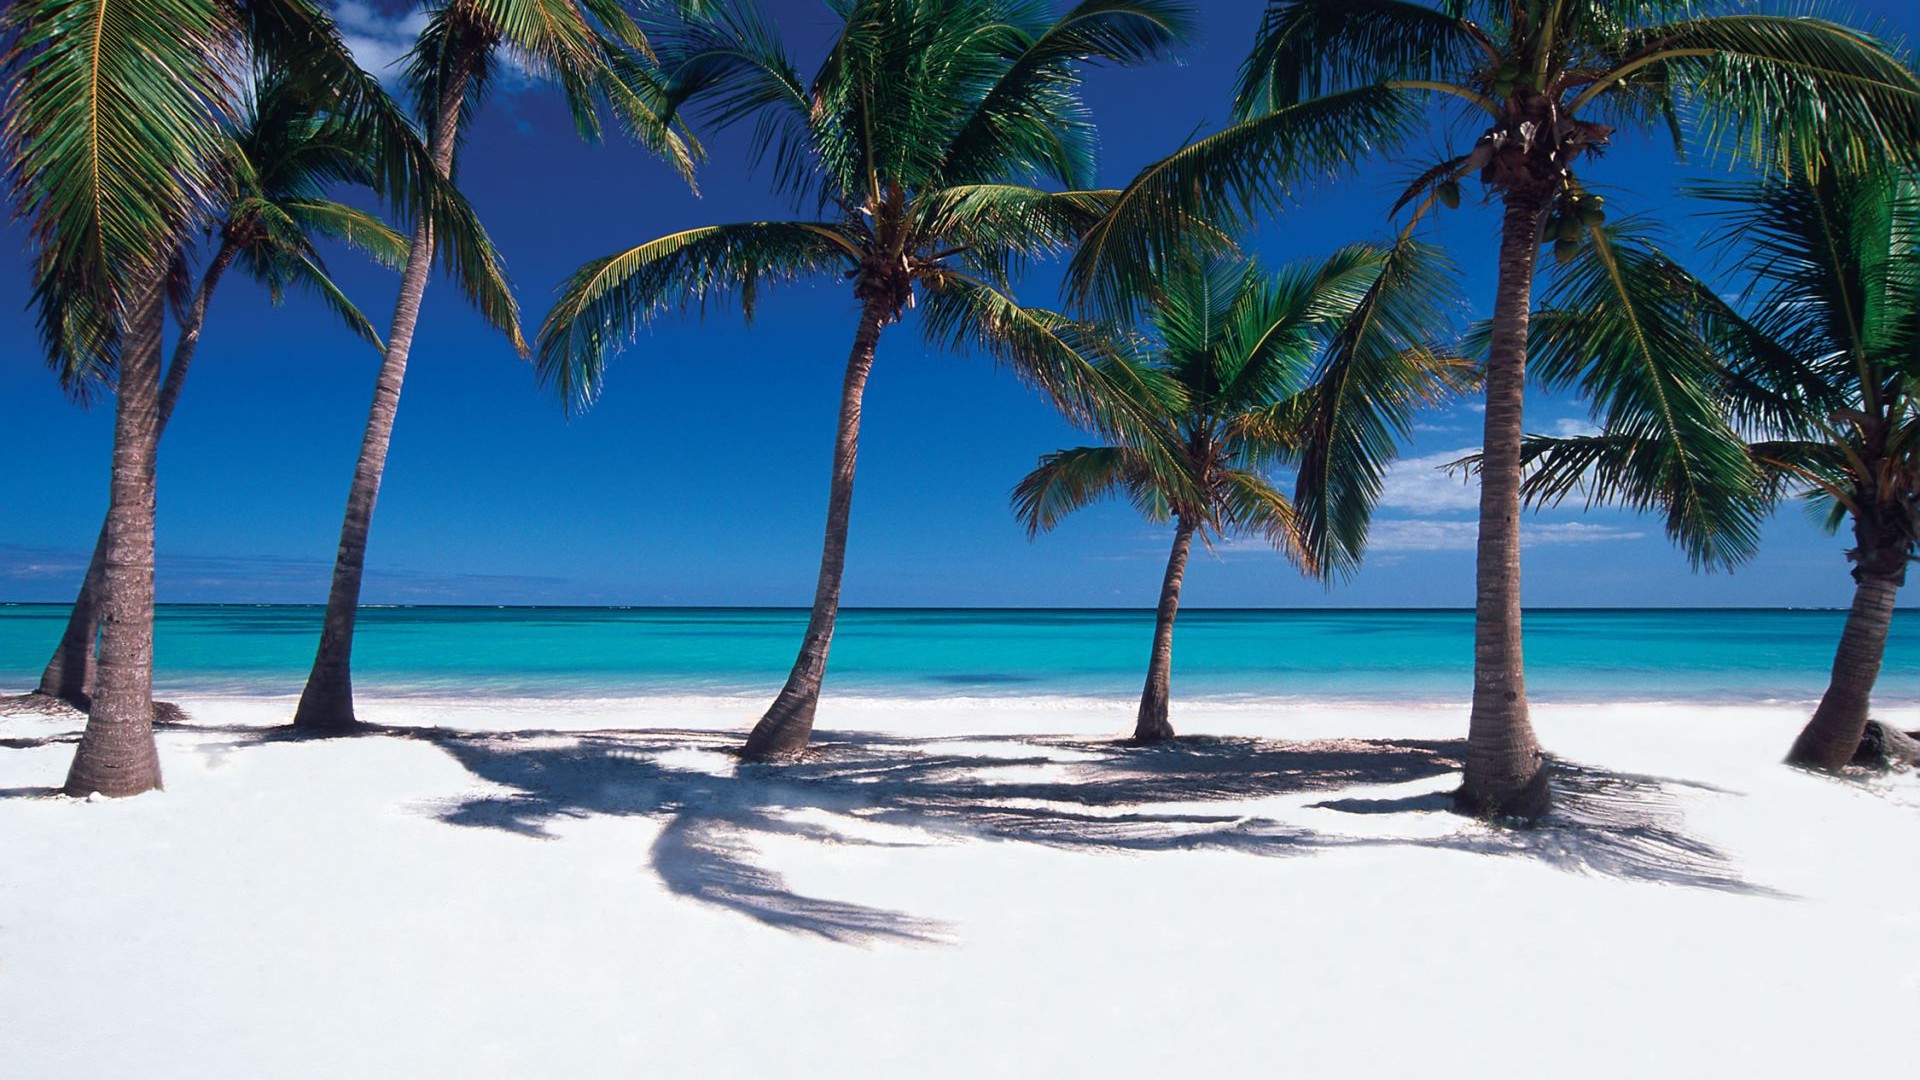 dominican republic wallpaper,tree,nature,tropics,palm tree,beach